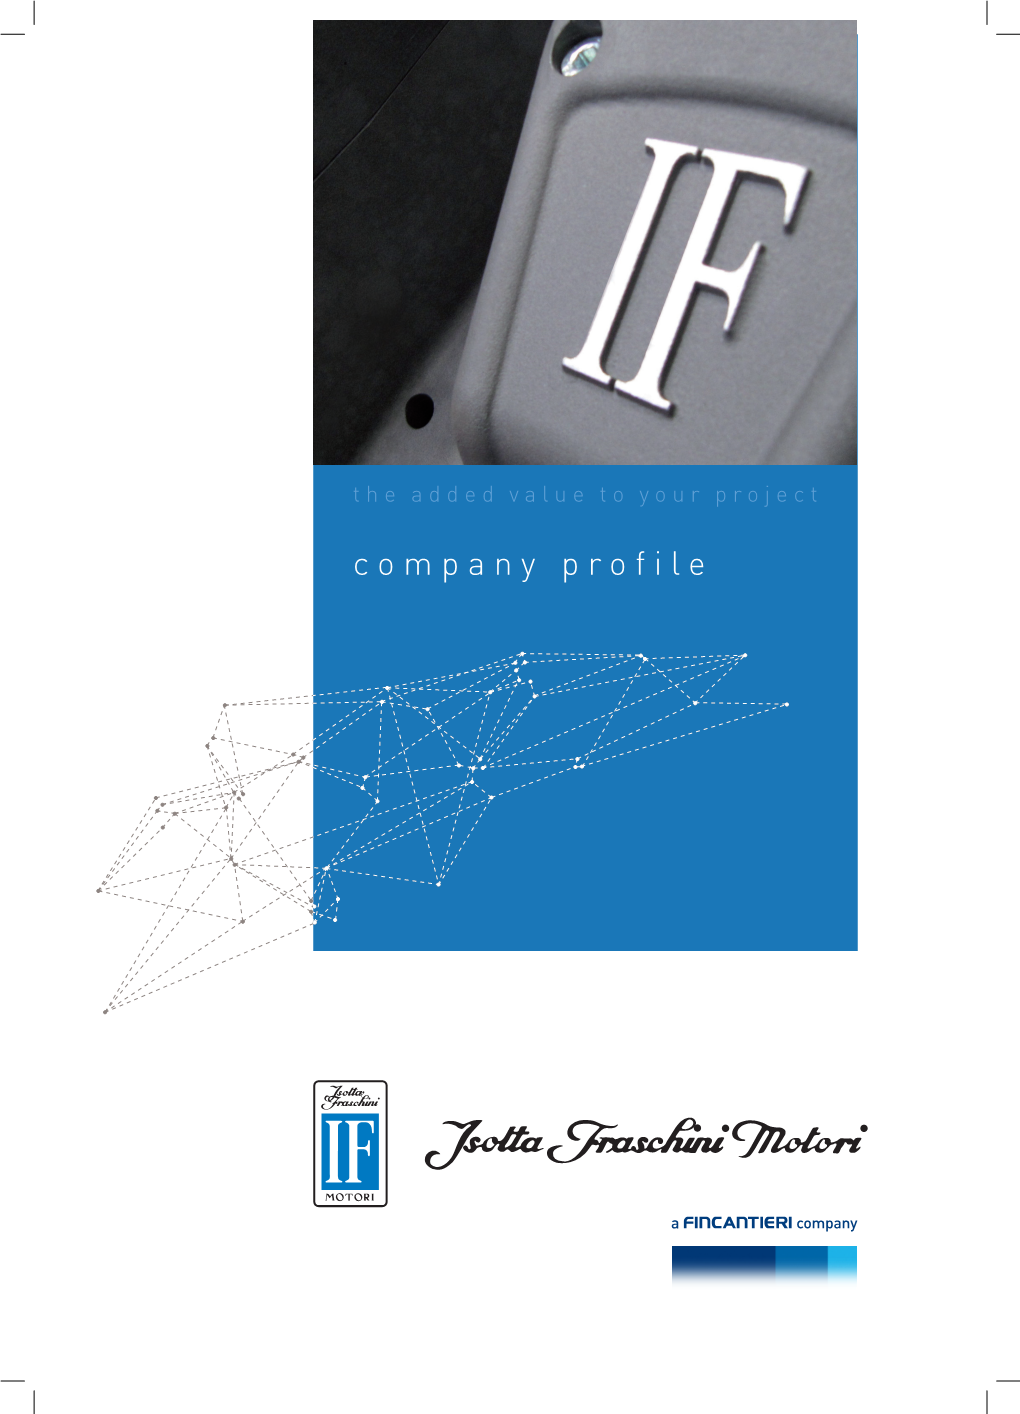 Isotta Fraschini Motori Company Profile